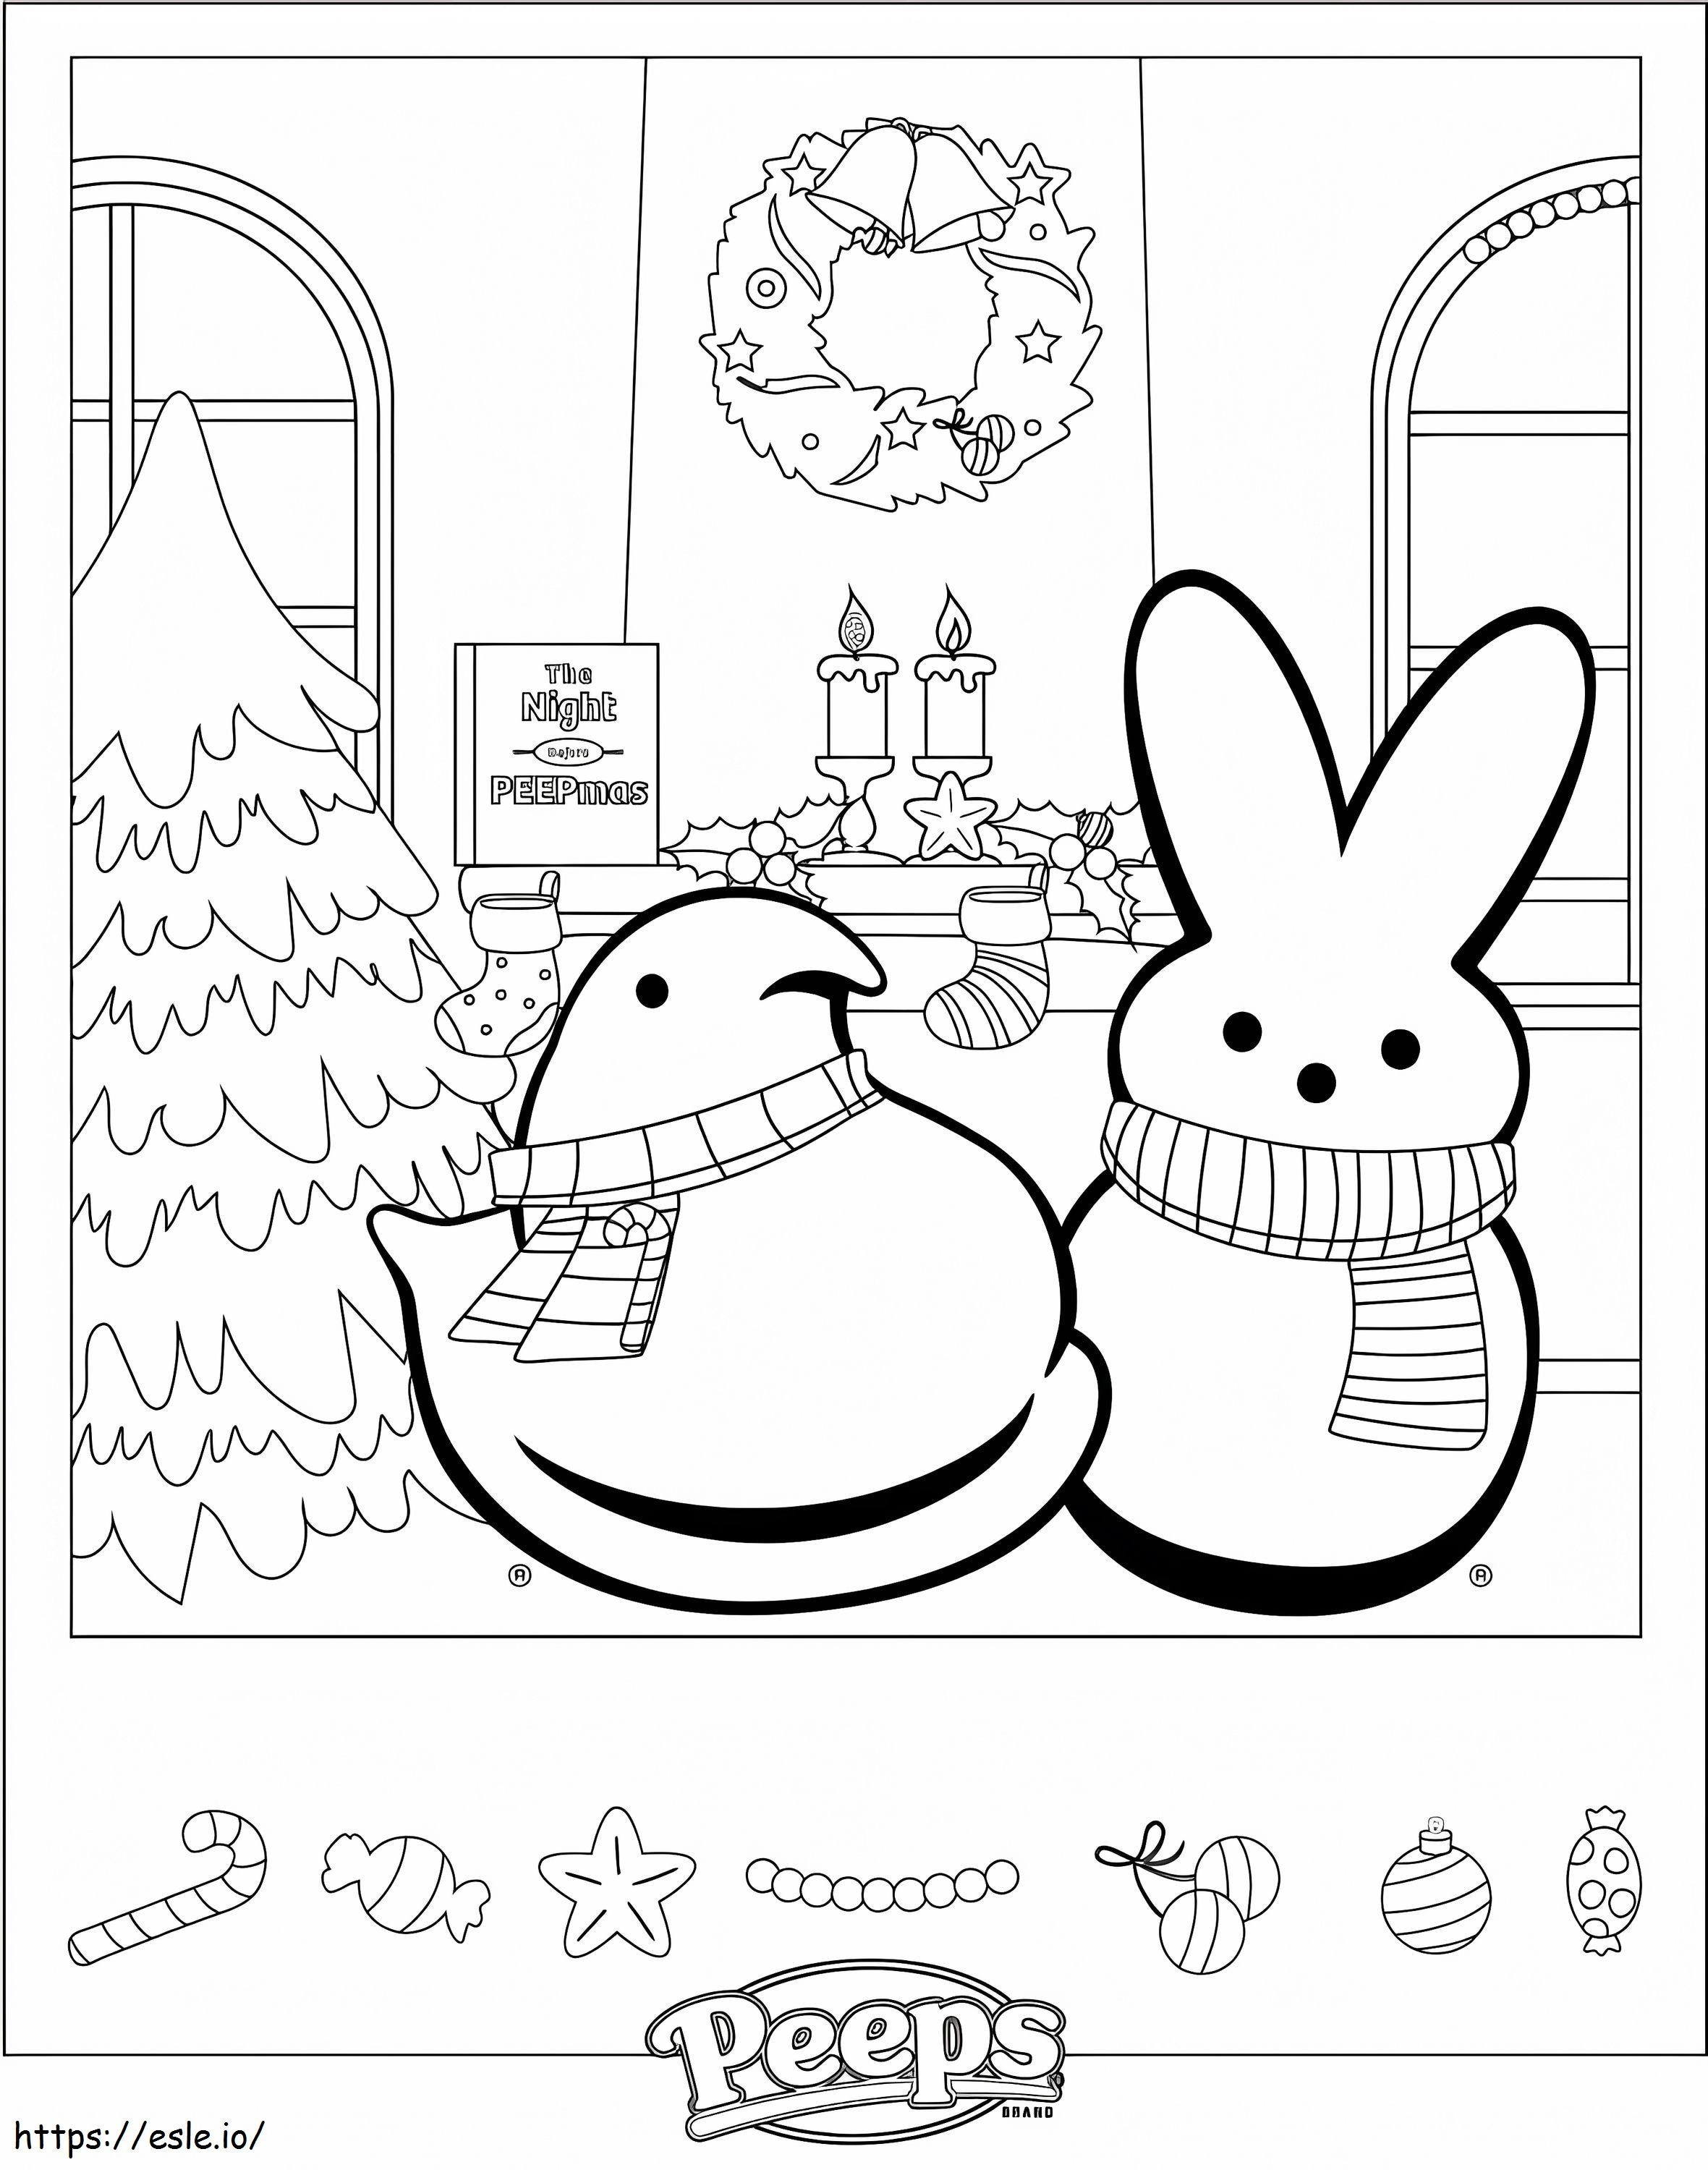 Christmas Peeps coloring page